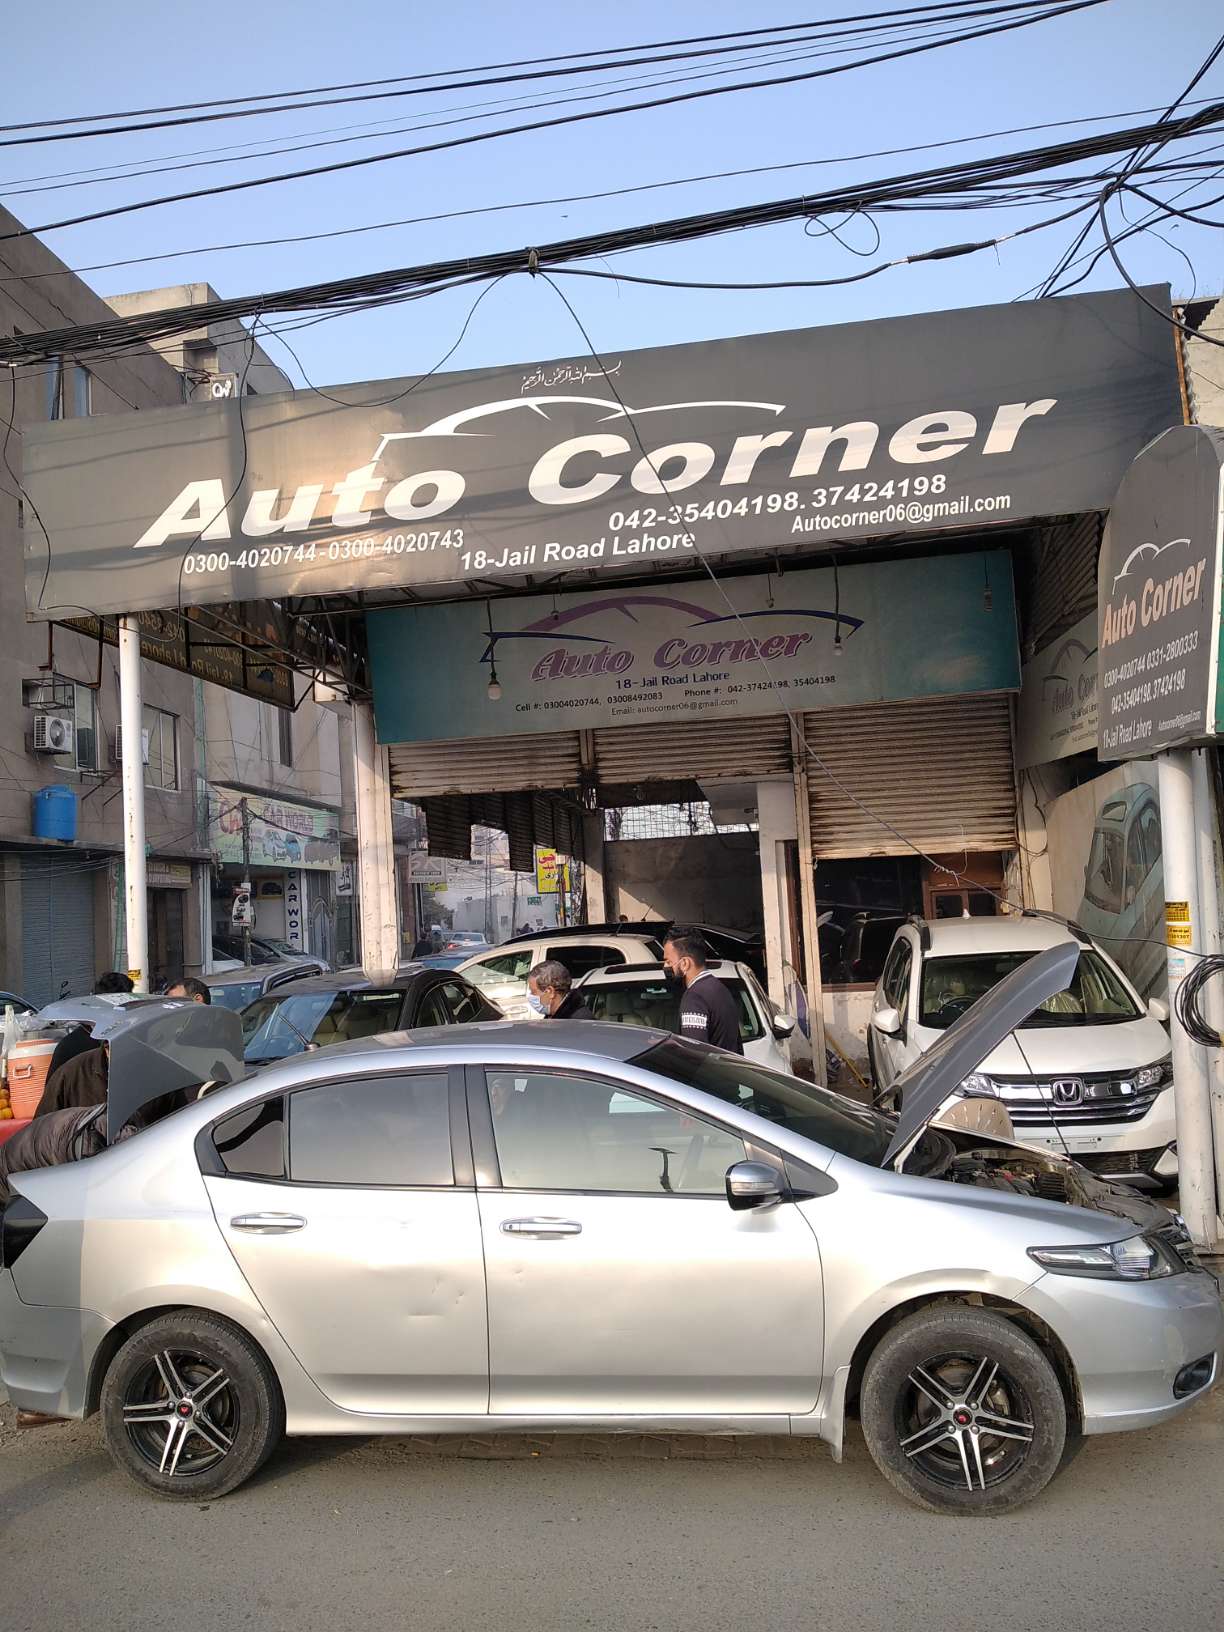 Auto Corner